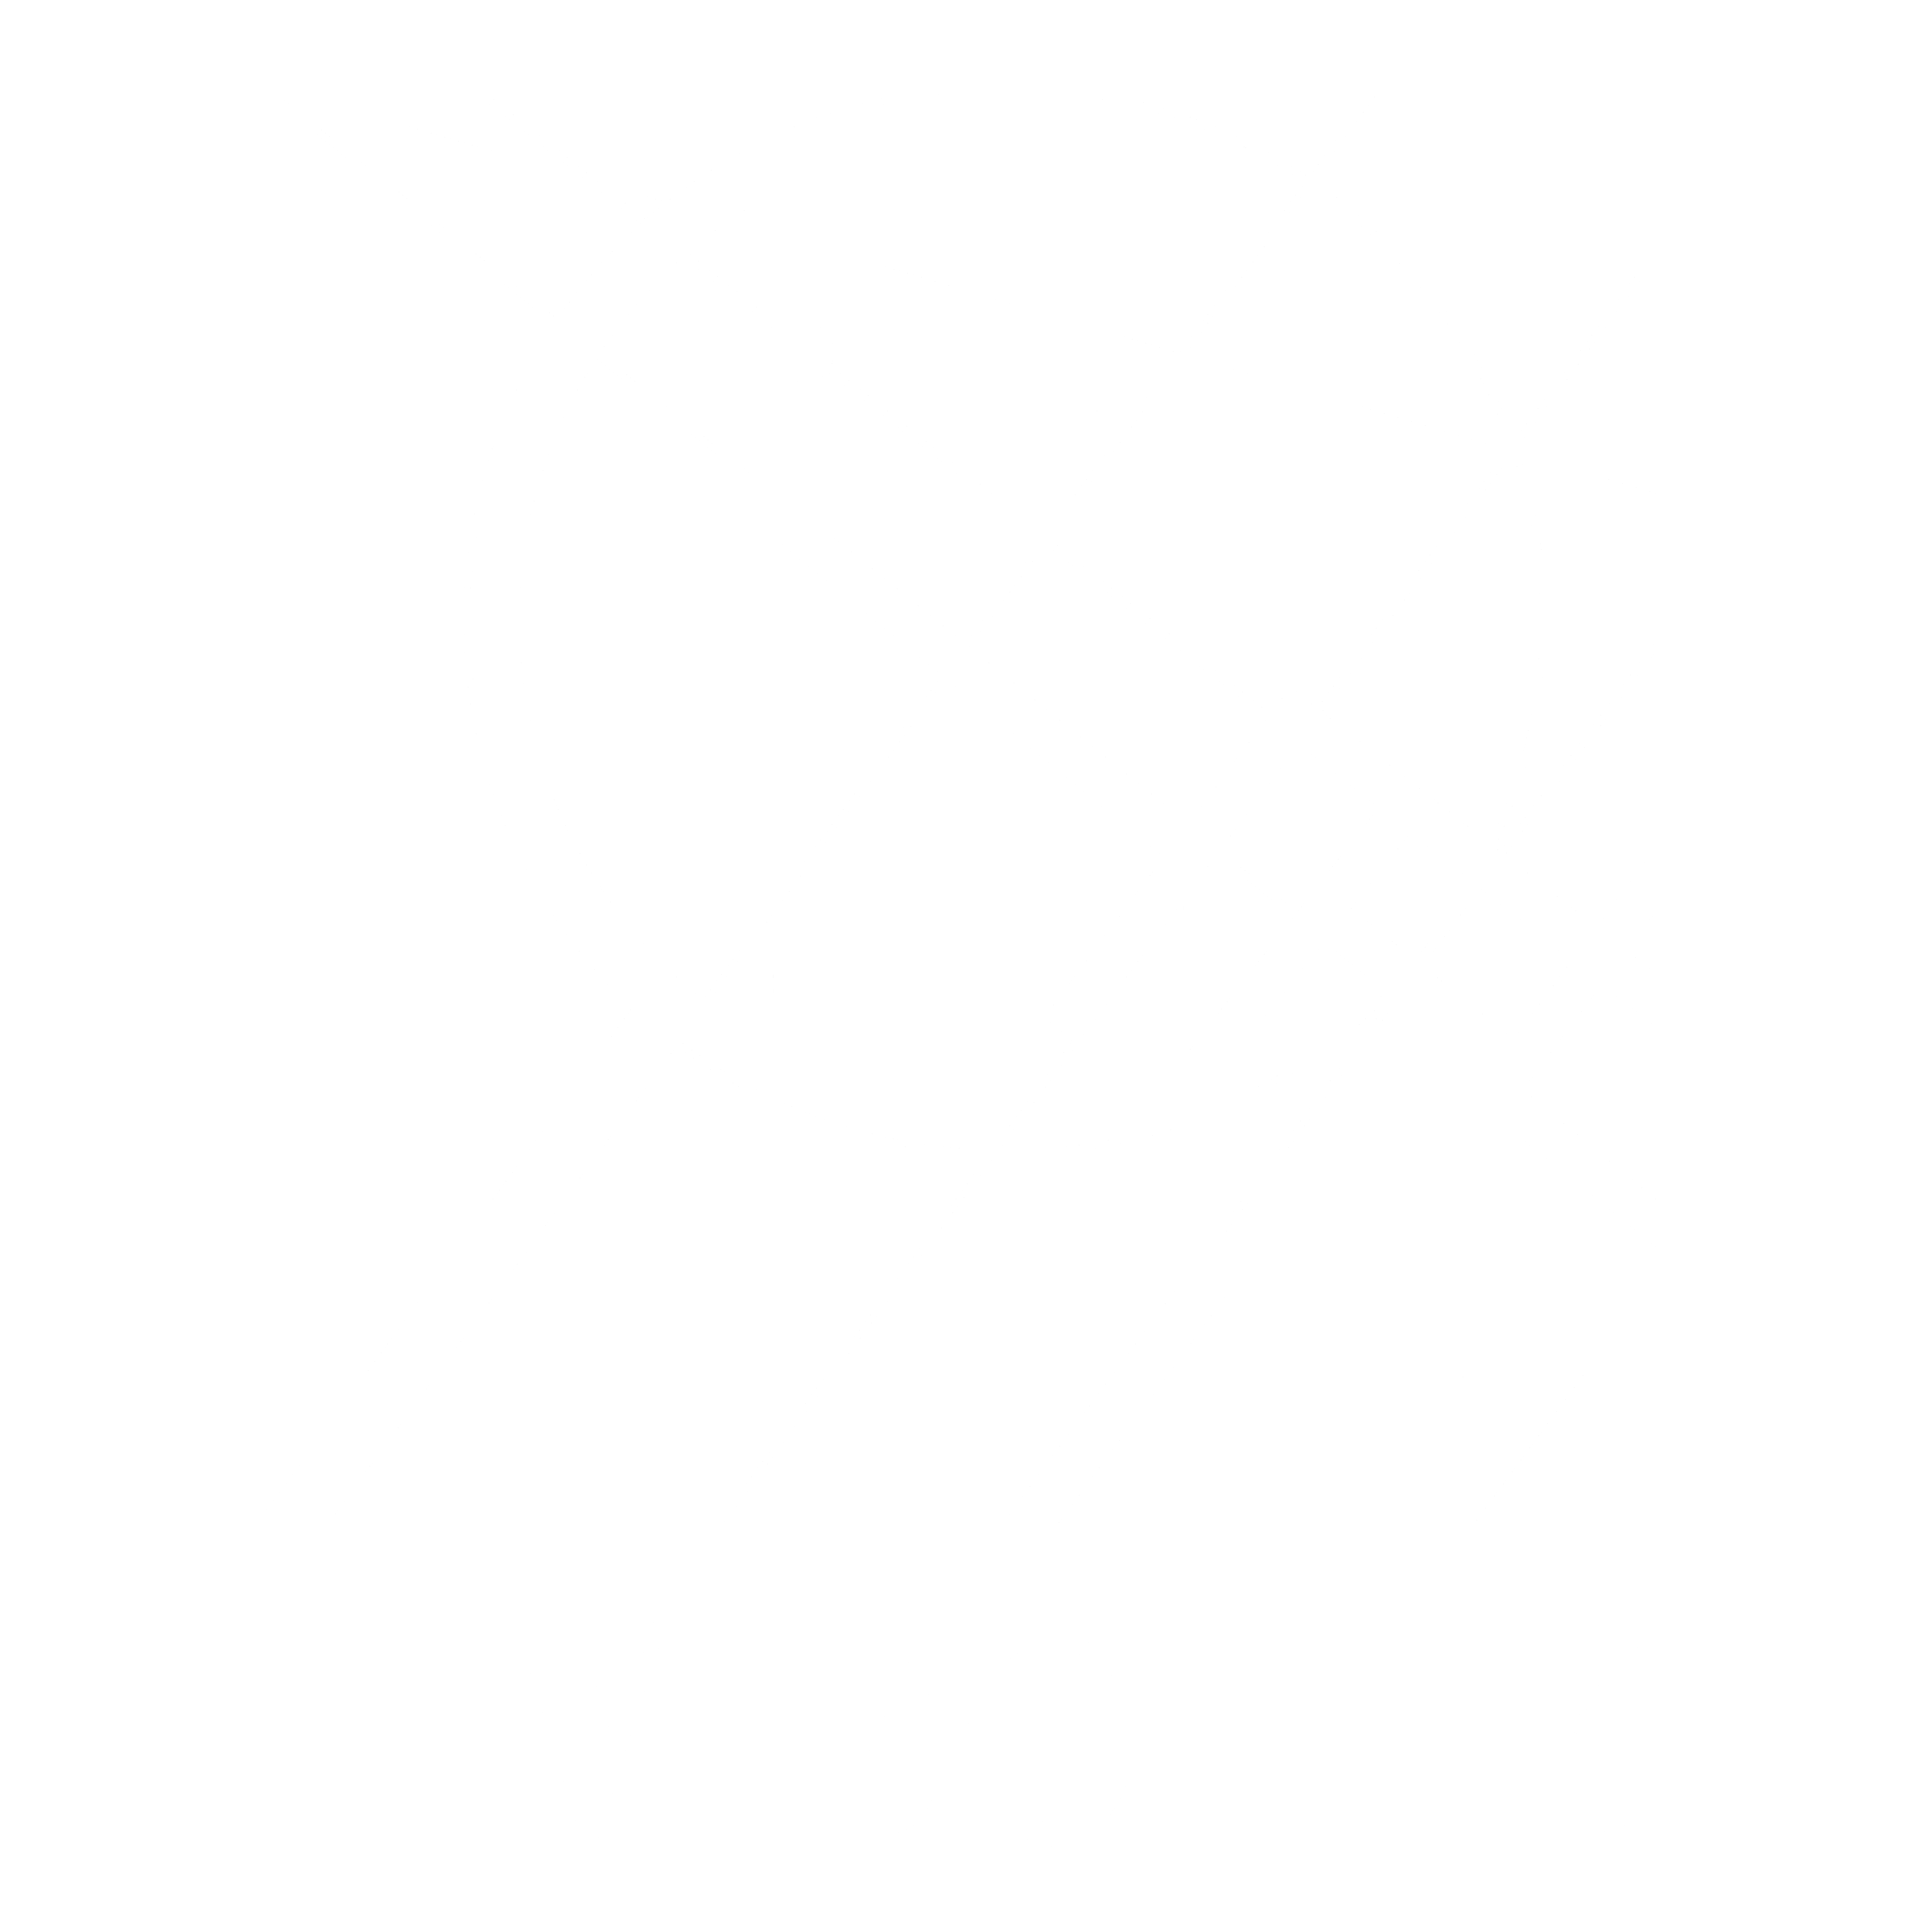 IMechE Logo - IMechE Logo PNG Transparent & SVG Vector - Freebie Supply